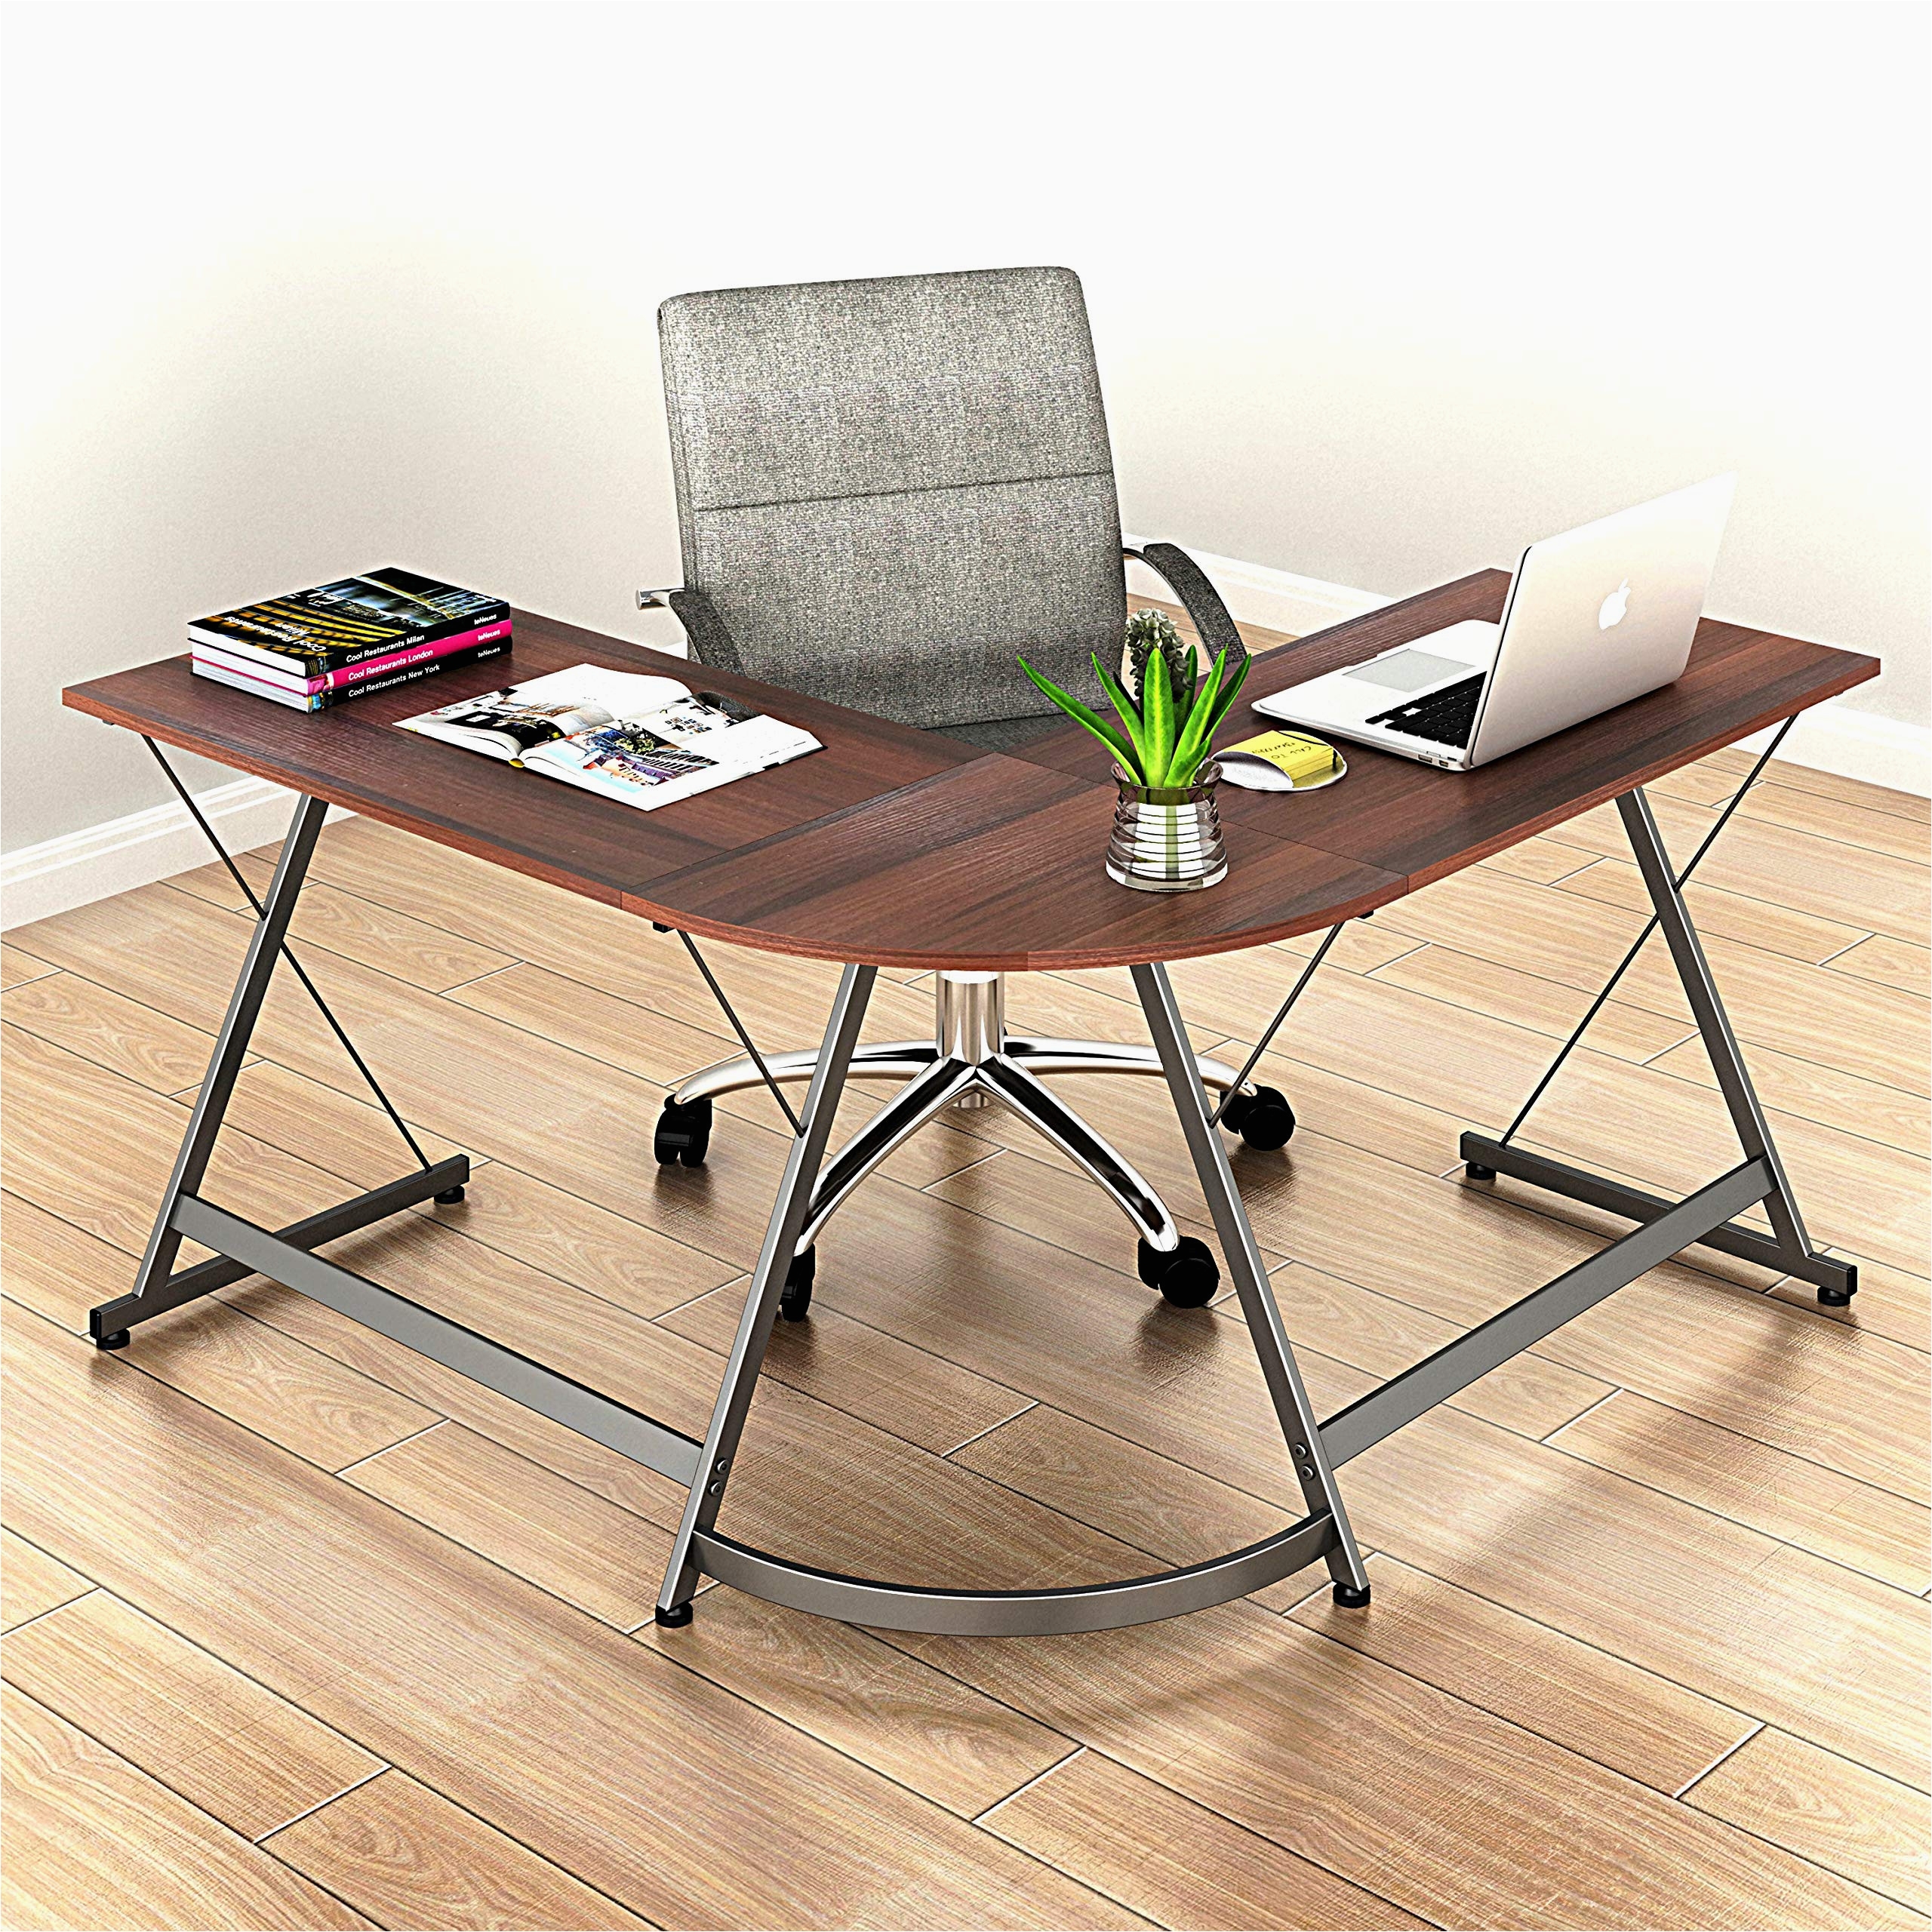 used office furniture austin tx fresh shw l shaped home fice corner desk wood top walnut